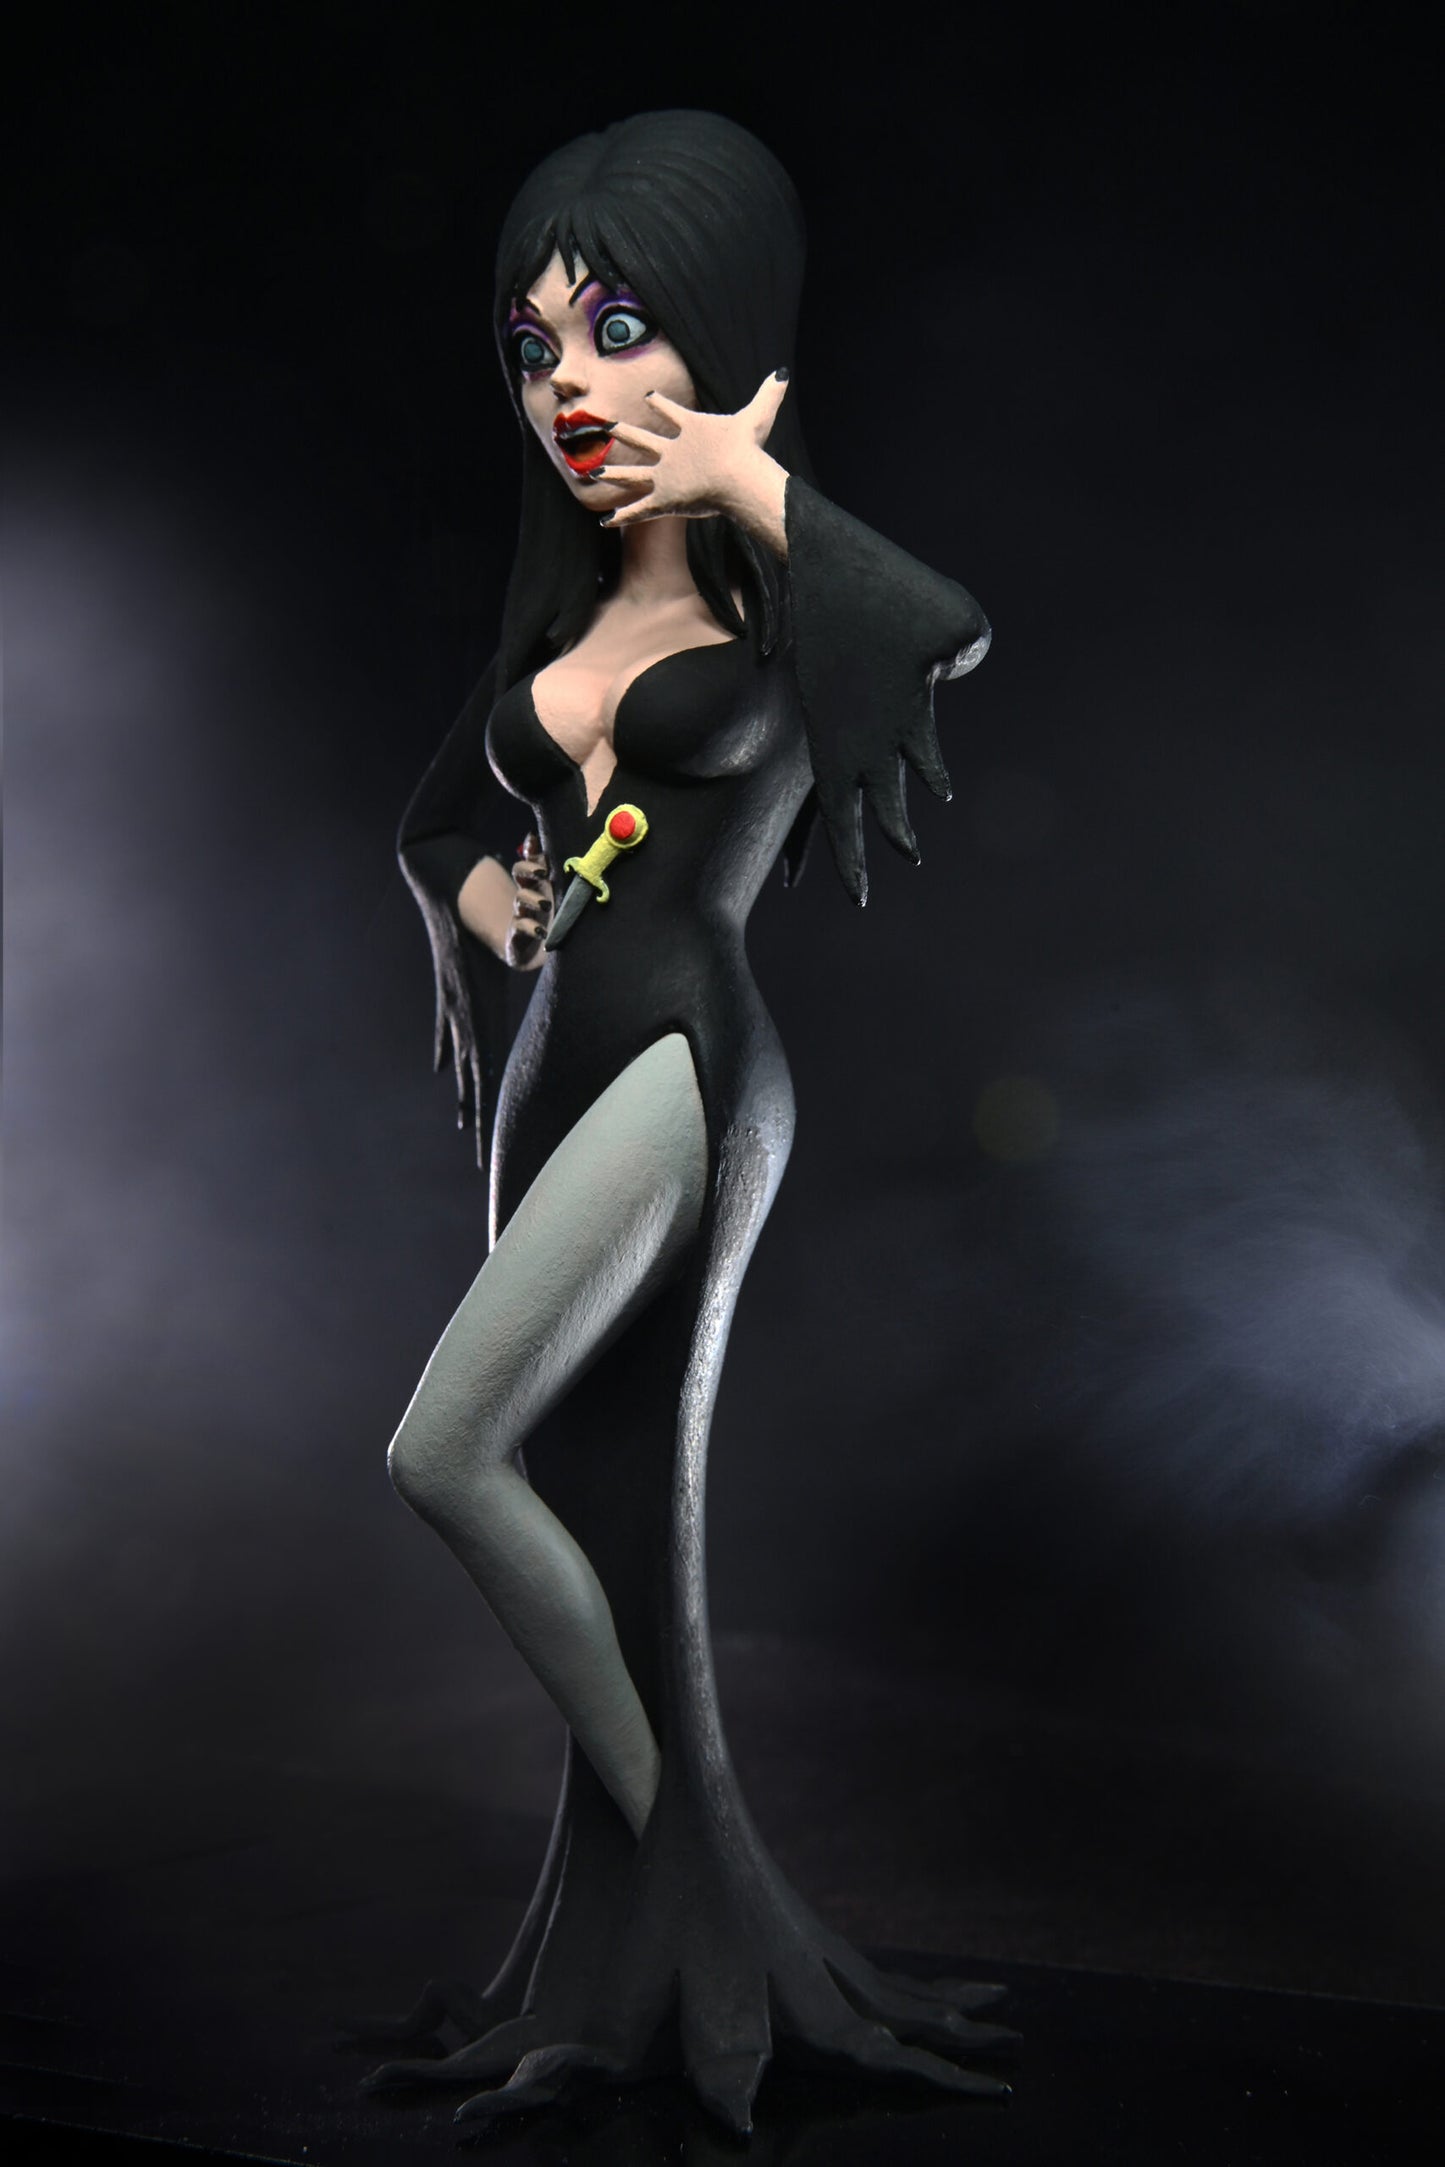 NECA - Toony Terrors Elvira - 6" Action Figure